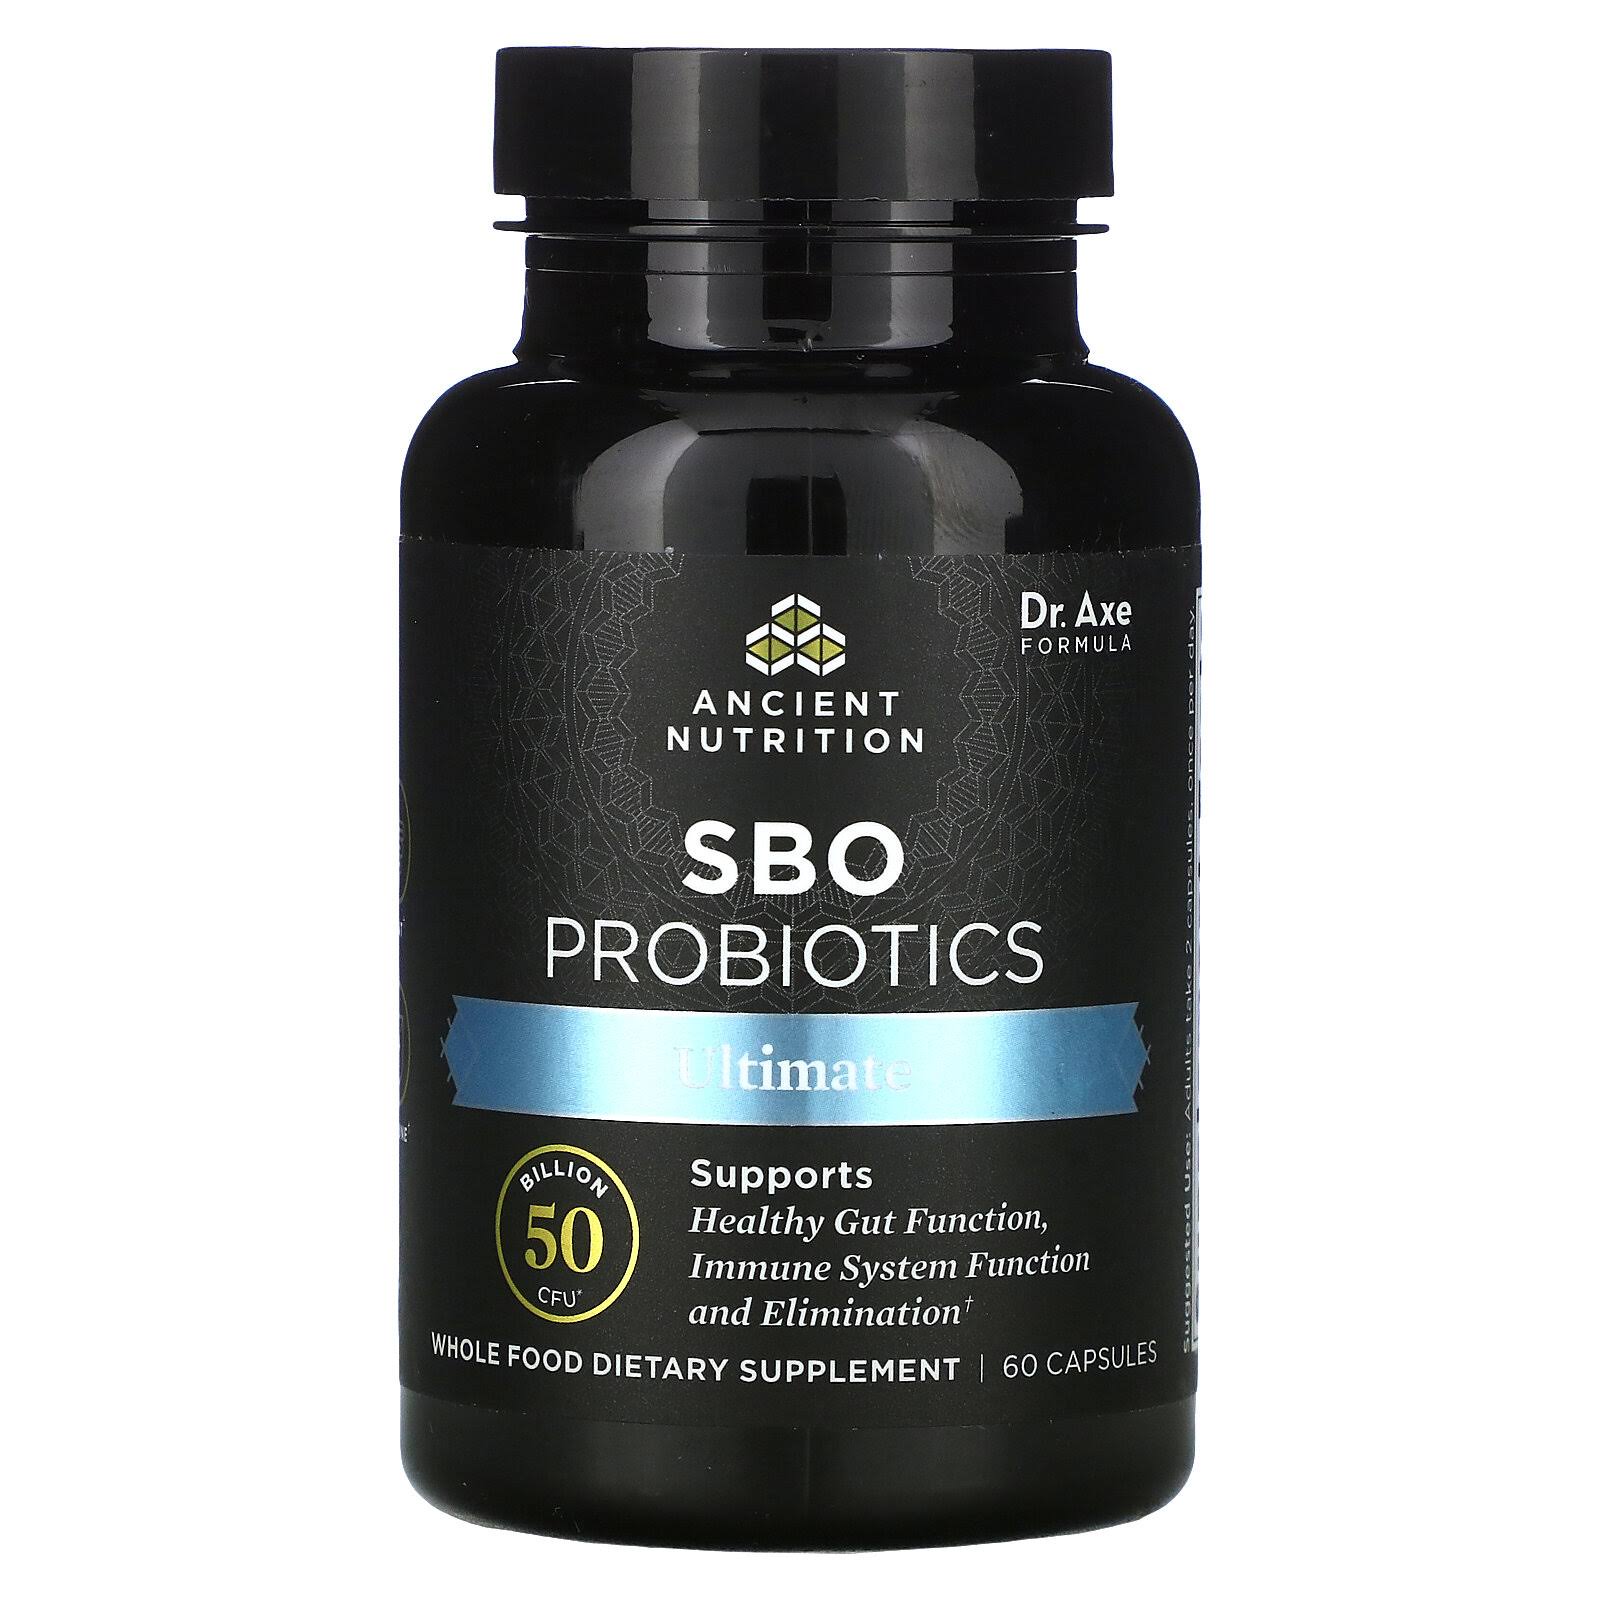 Ancient Nutrition - SBO Probiotics Ultimate Formula 50 Billion CFU - 60 Capsules